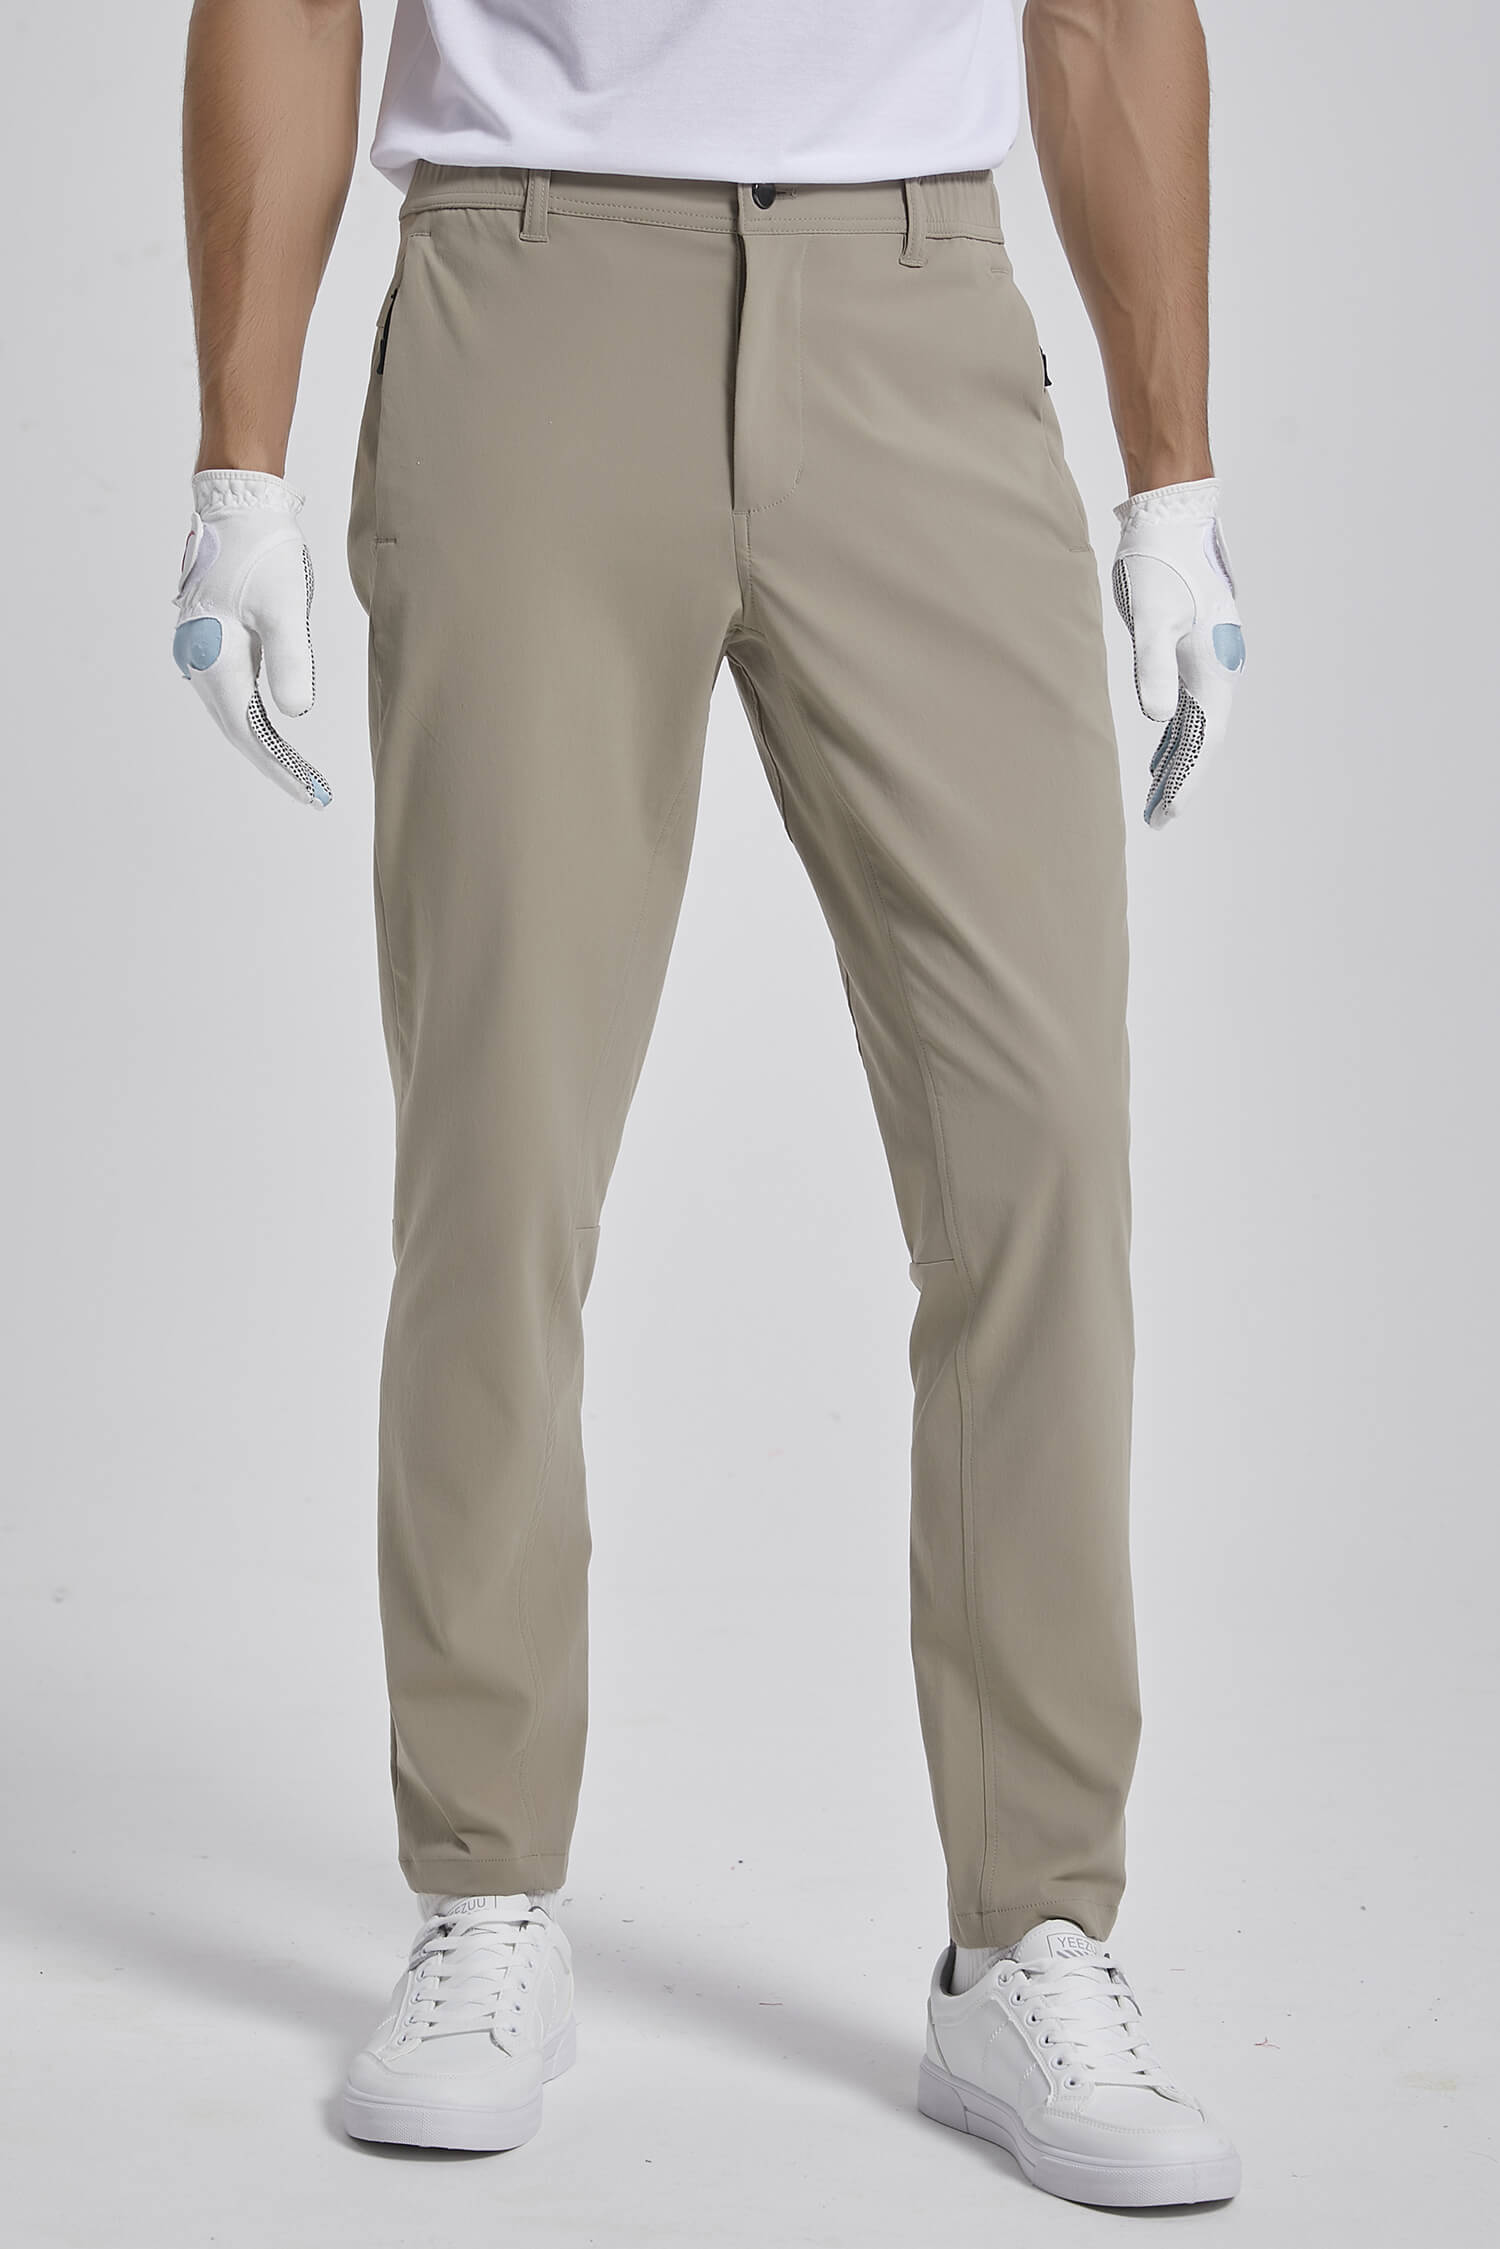 Men's Golf Pants Hiking Slim Fit Straight Leg Chino Pants with